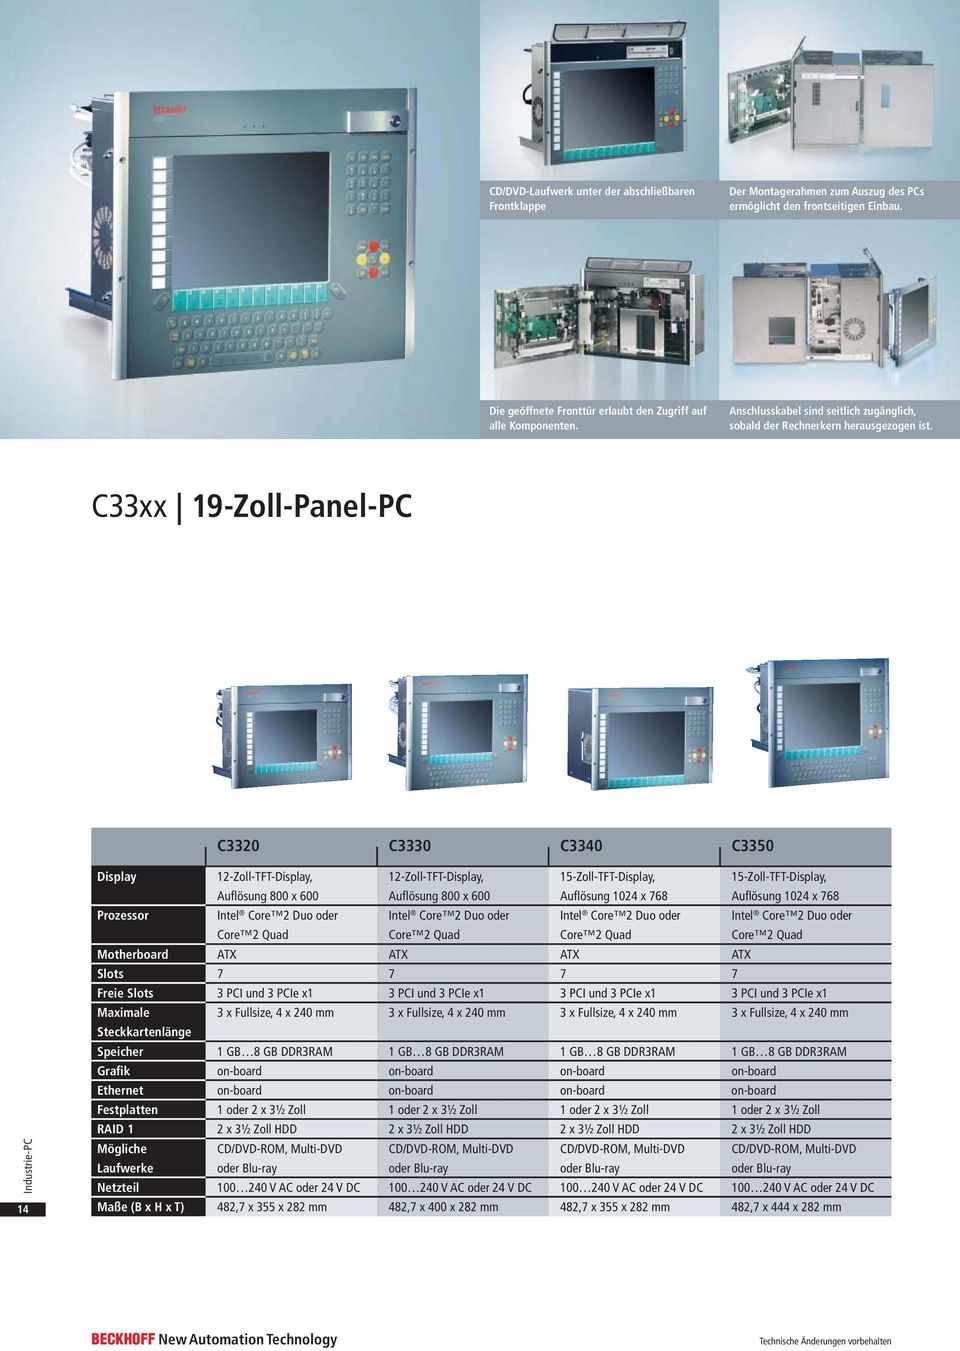 C33xx 19-Zoll-Panel-PC C3320 C3330 C3340 C3350 Industrie-PC 14 Display 12-Zoll-TFT-Display, Auflösung 800 x 600 12-Zoll-TFT-Display, Auflösung 800 x 600 15-Zoll-TFT-Display, Auflösung 1024 x 768